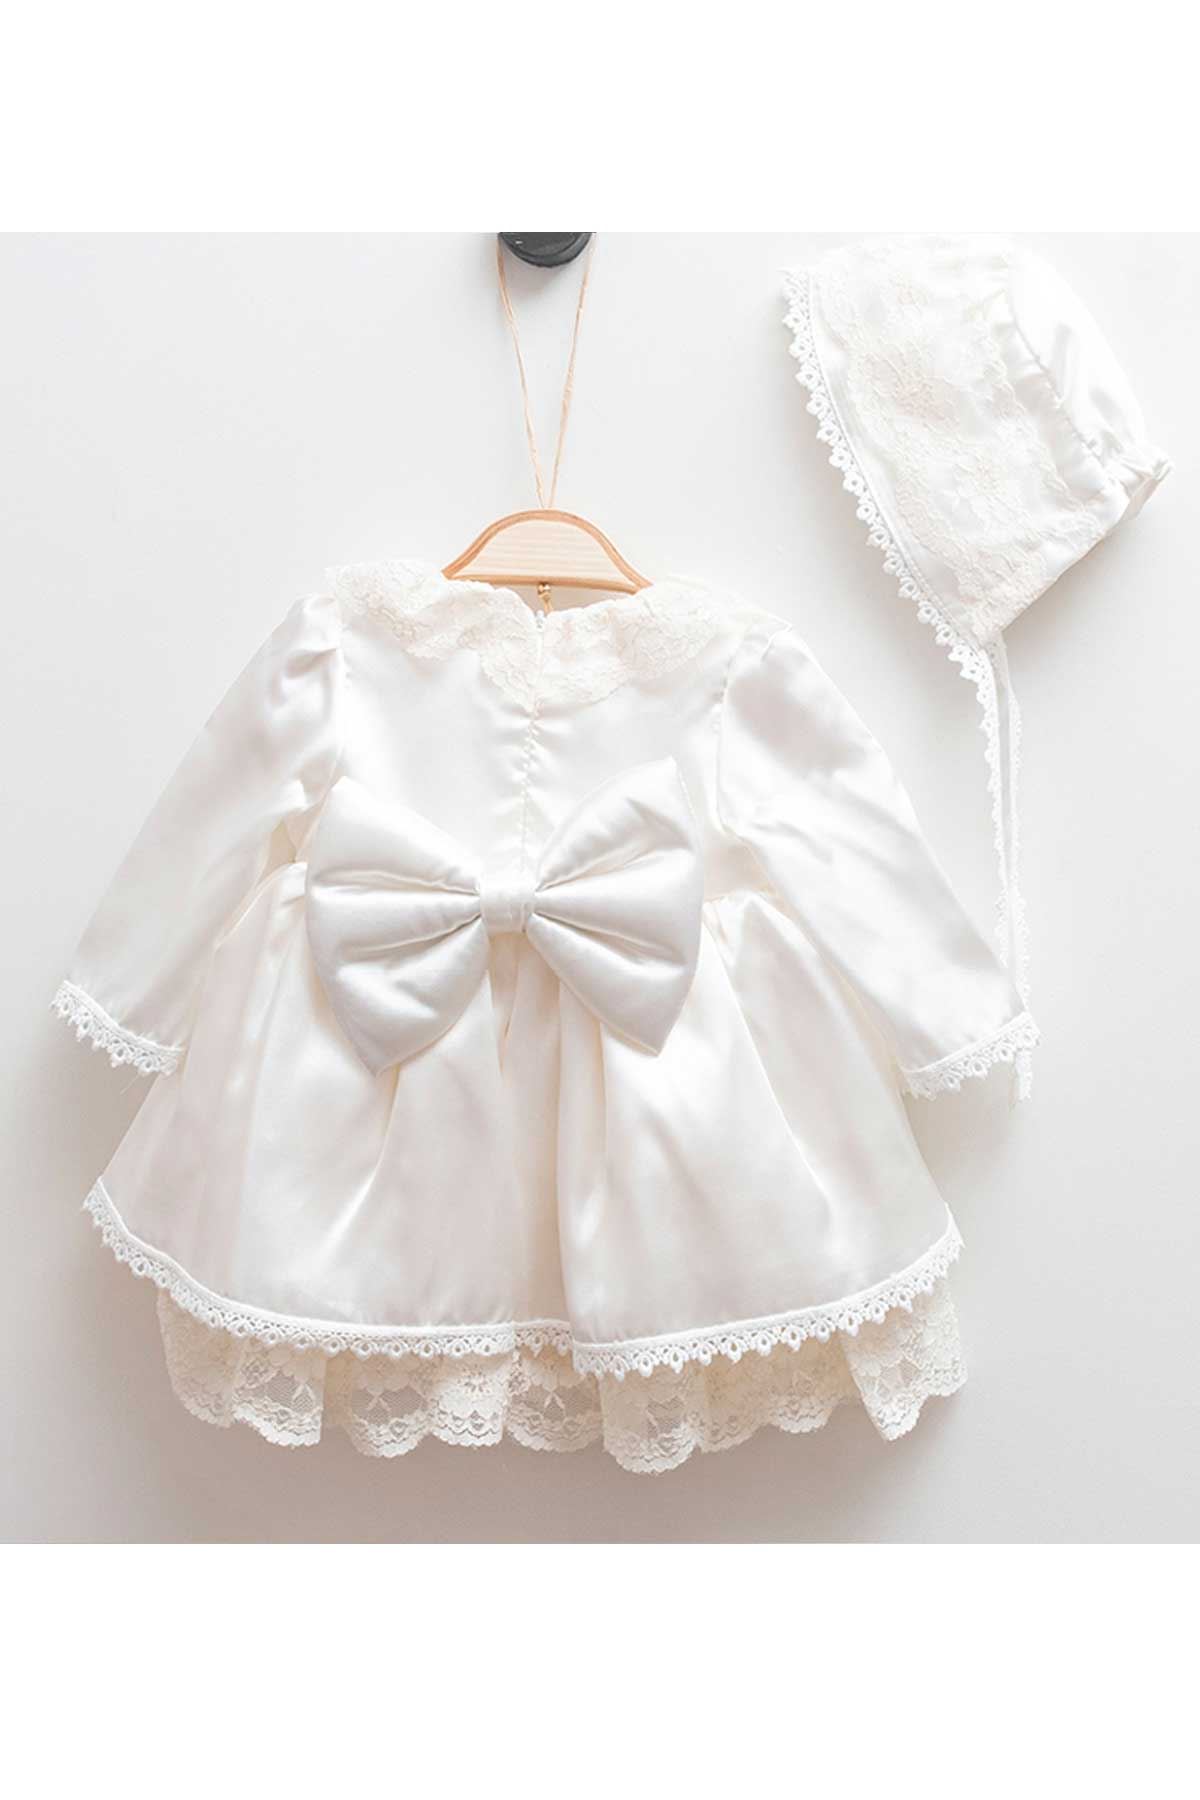 Krem Pelerin Dantel Kız Bebek Elbise Set